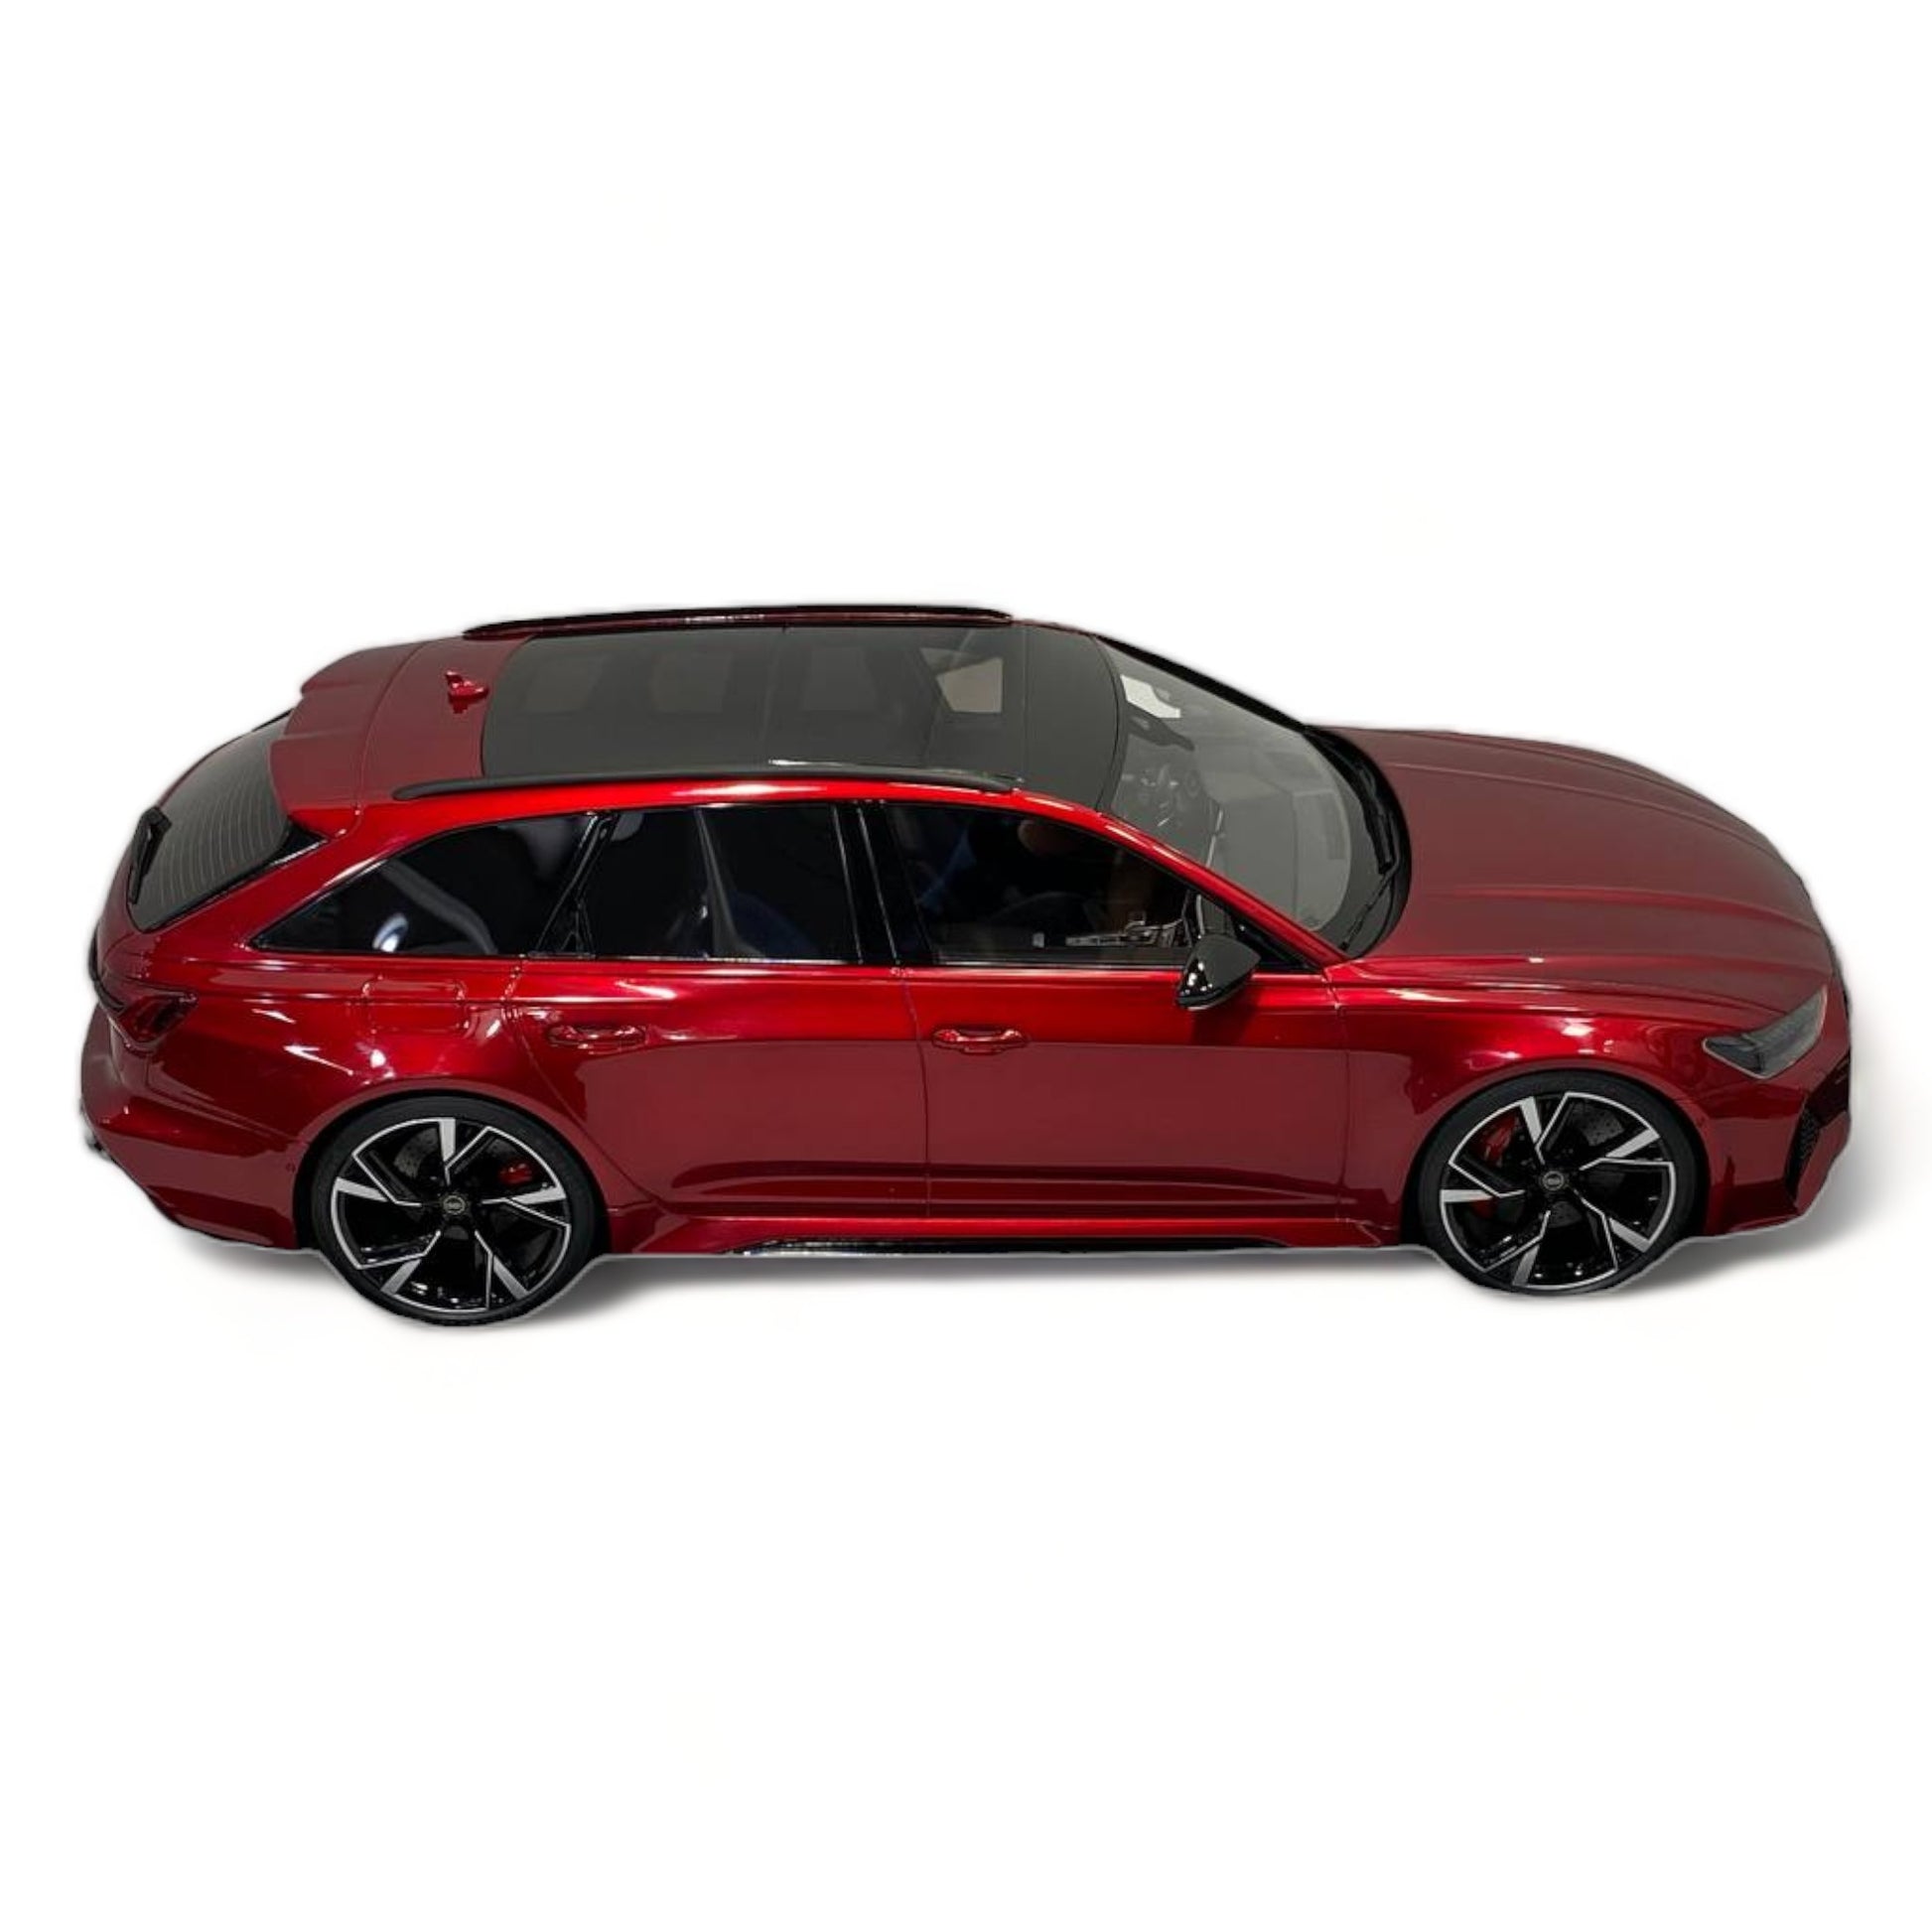 1/18 Diecast Motor Helix Audi RS 7 AVANT RED Scale Model Car|Sold in Dturman.com Dubai UAE.